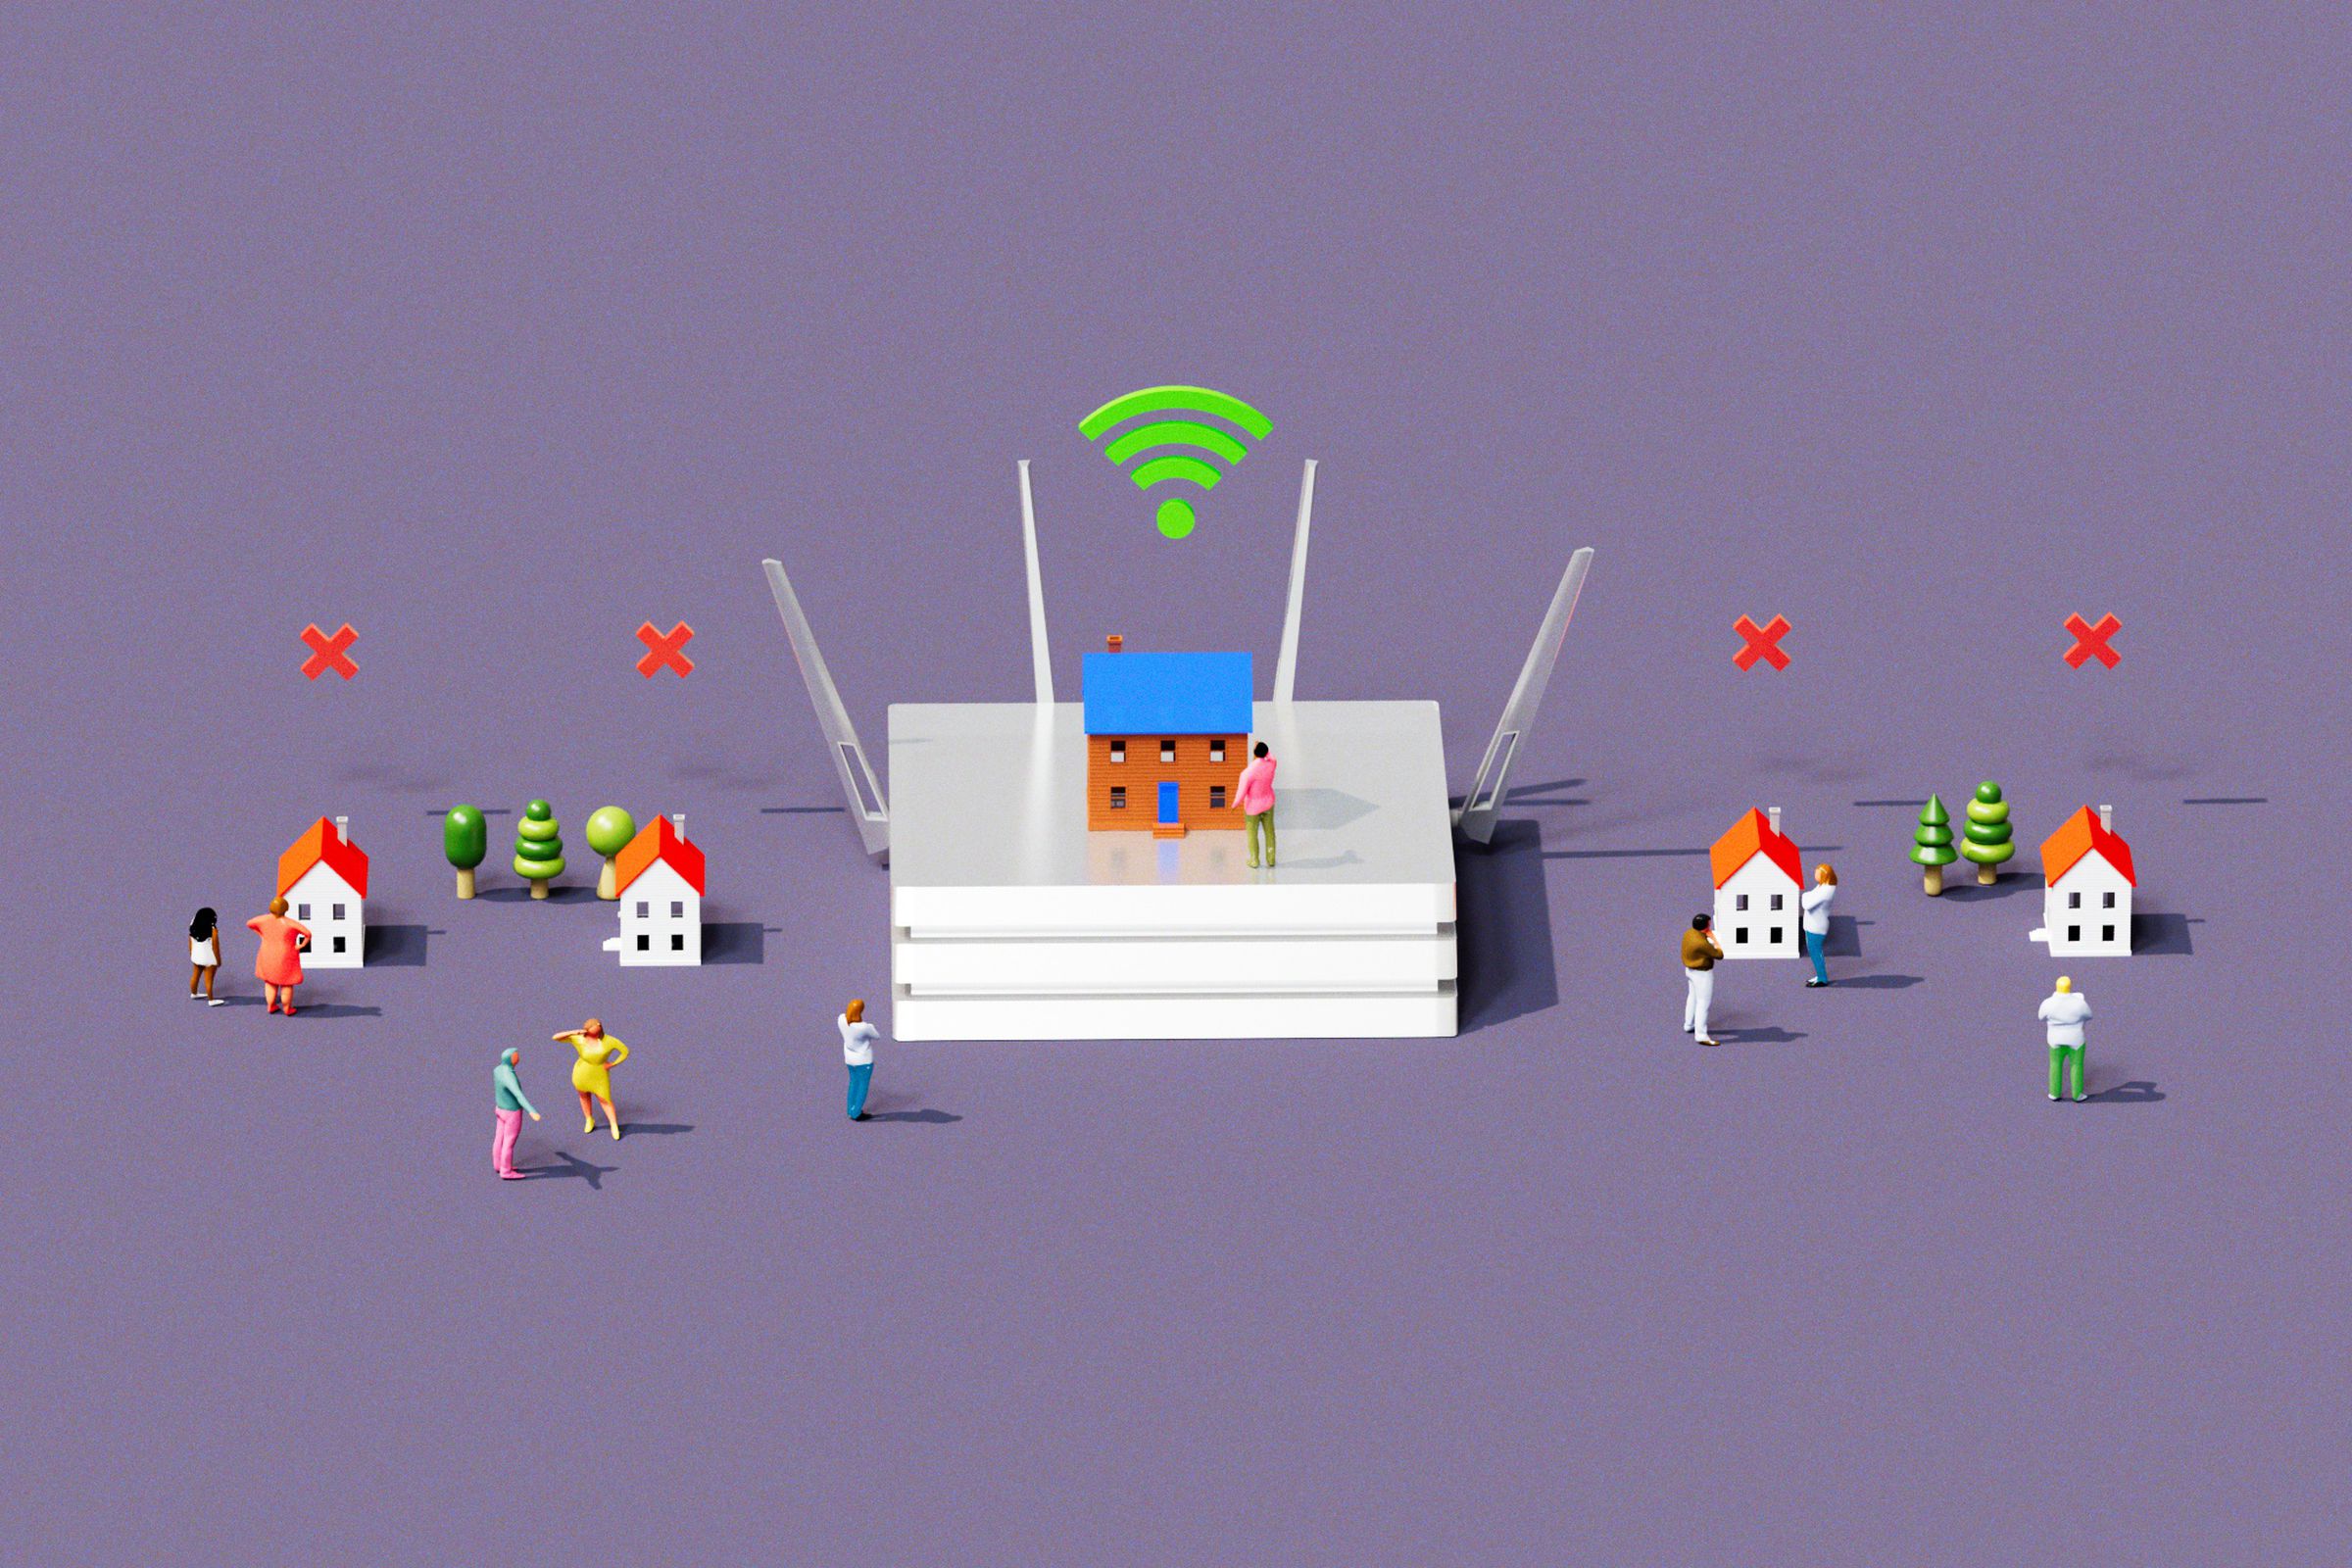 3D illustration showing discriminatory patterns in internet access.